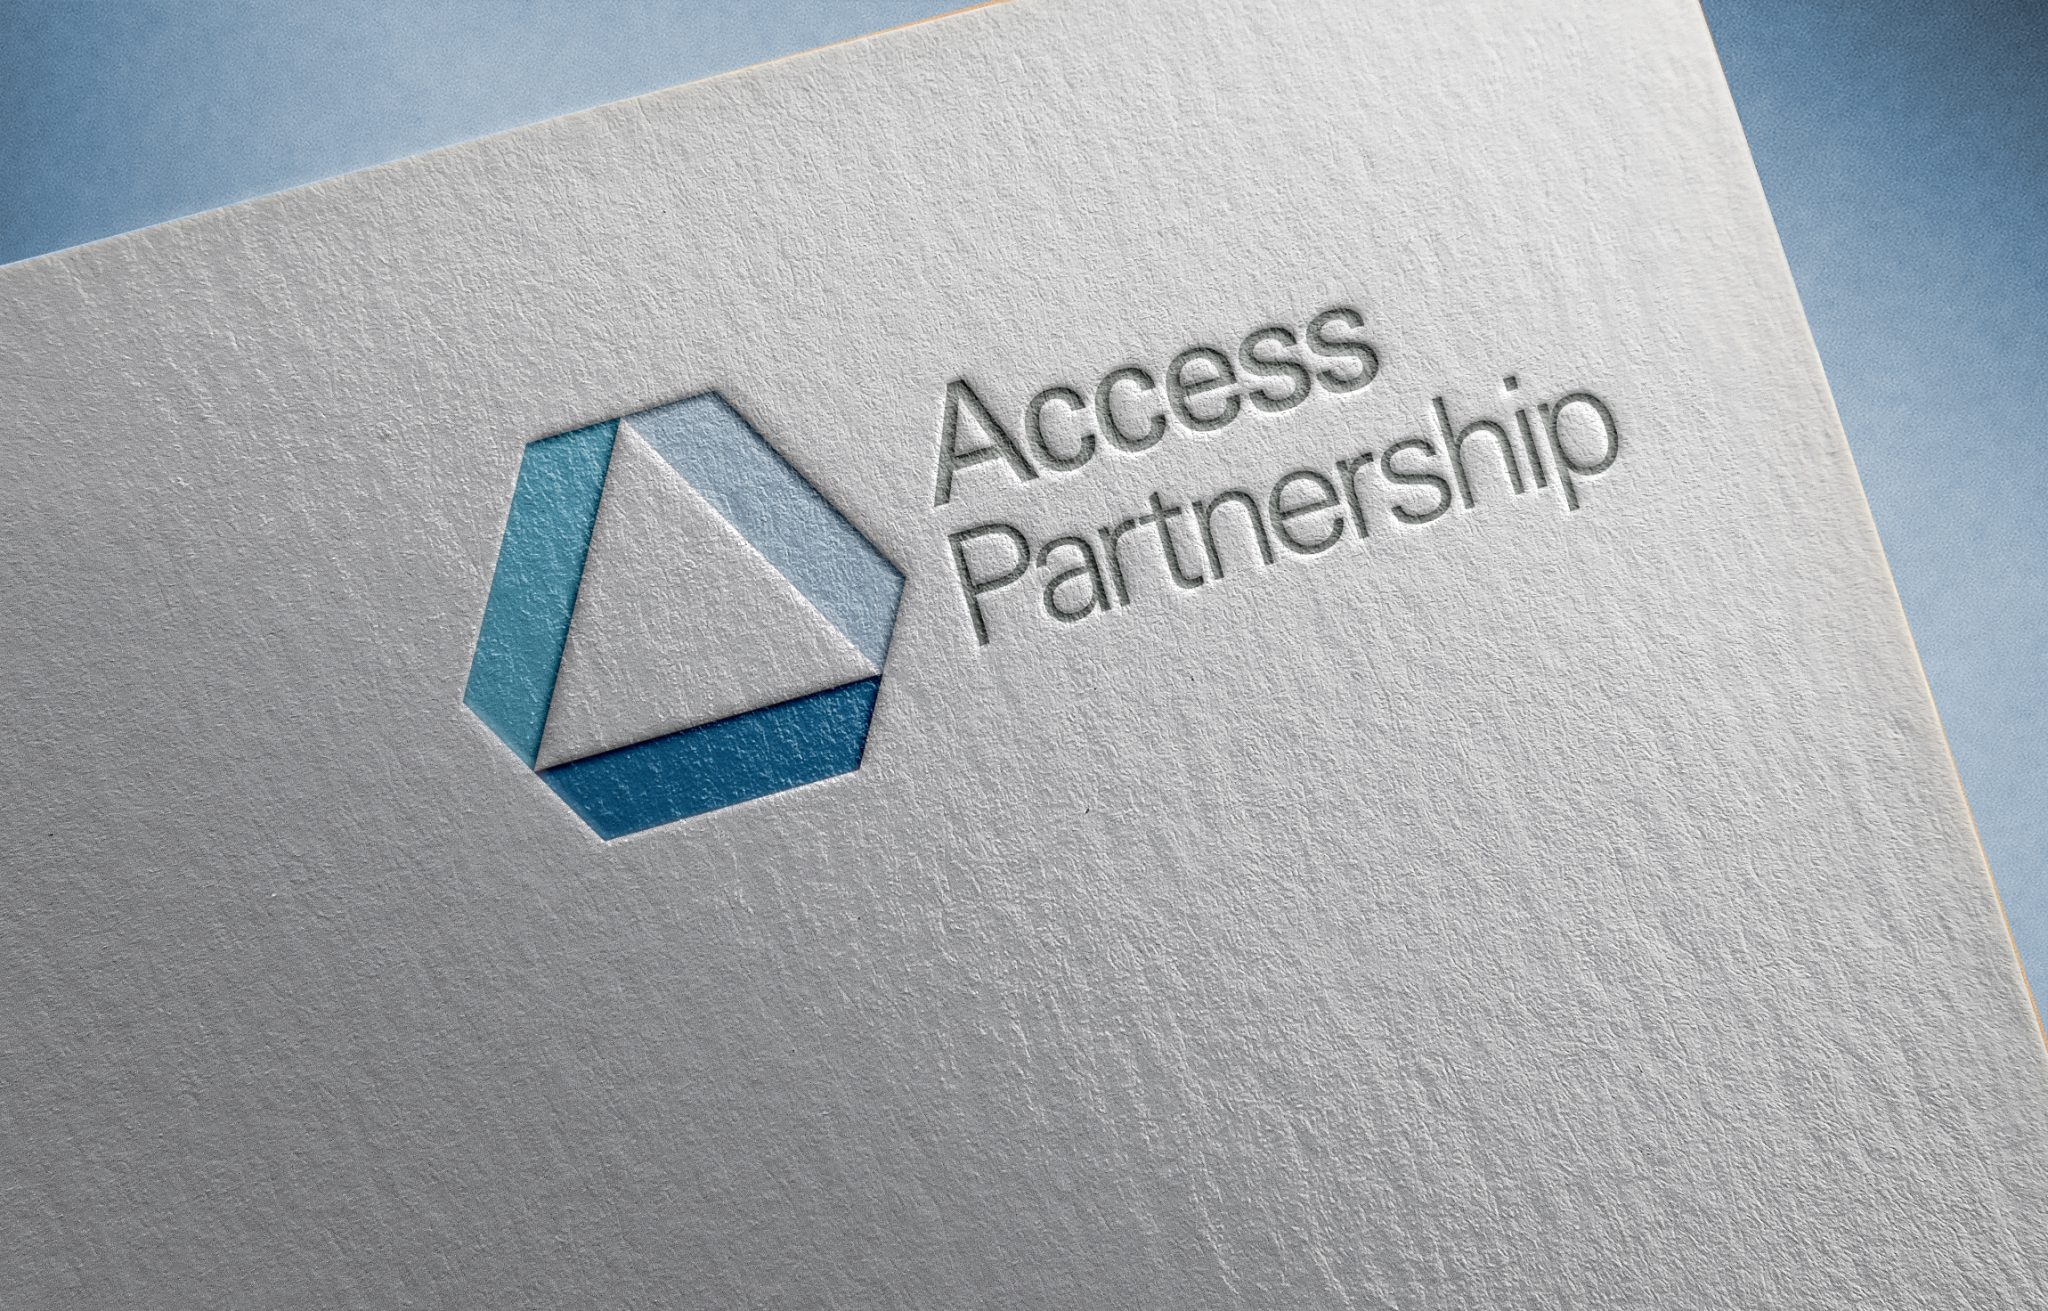 Access Partnership Appoints Heizo Takenaka as Senior Advisor in Japan